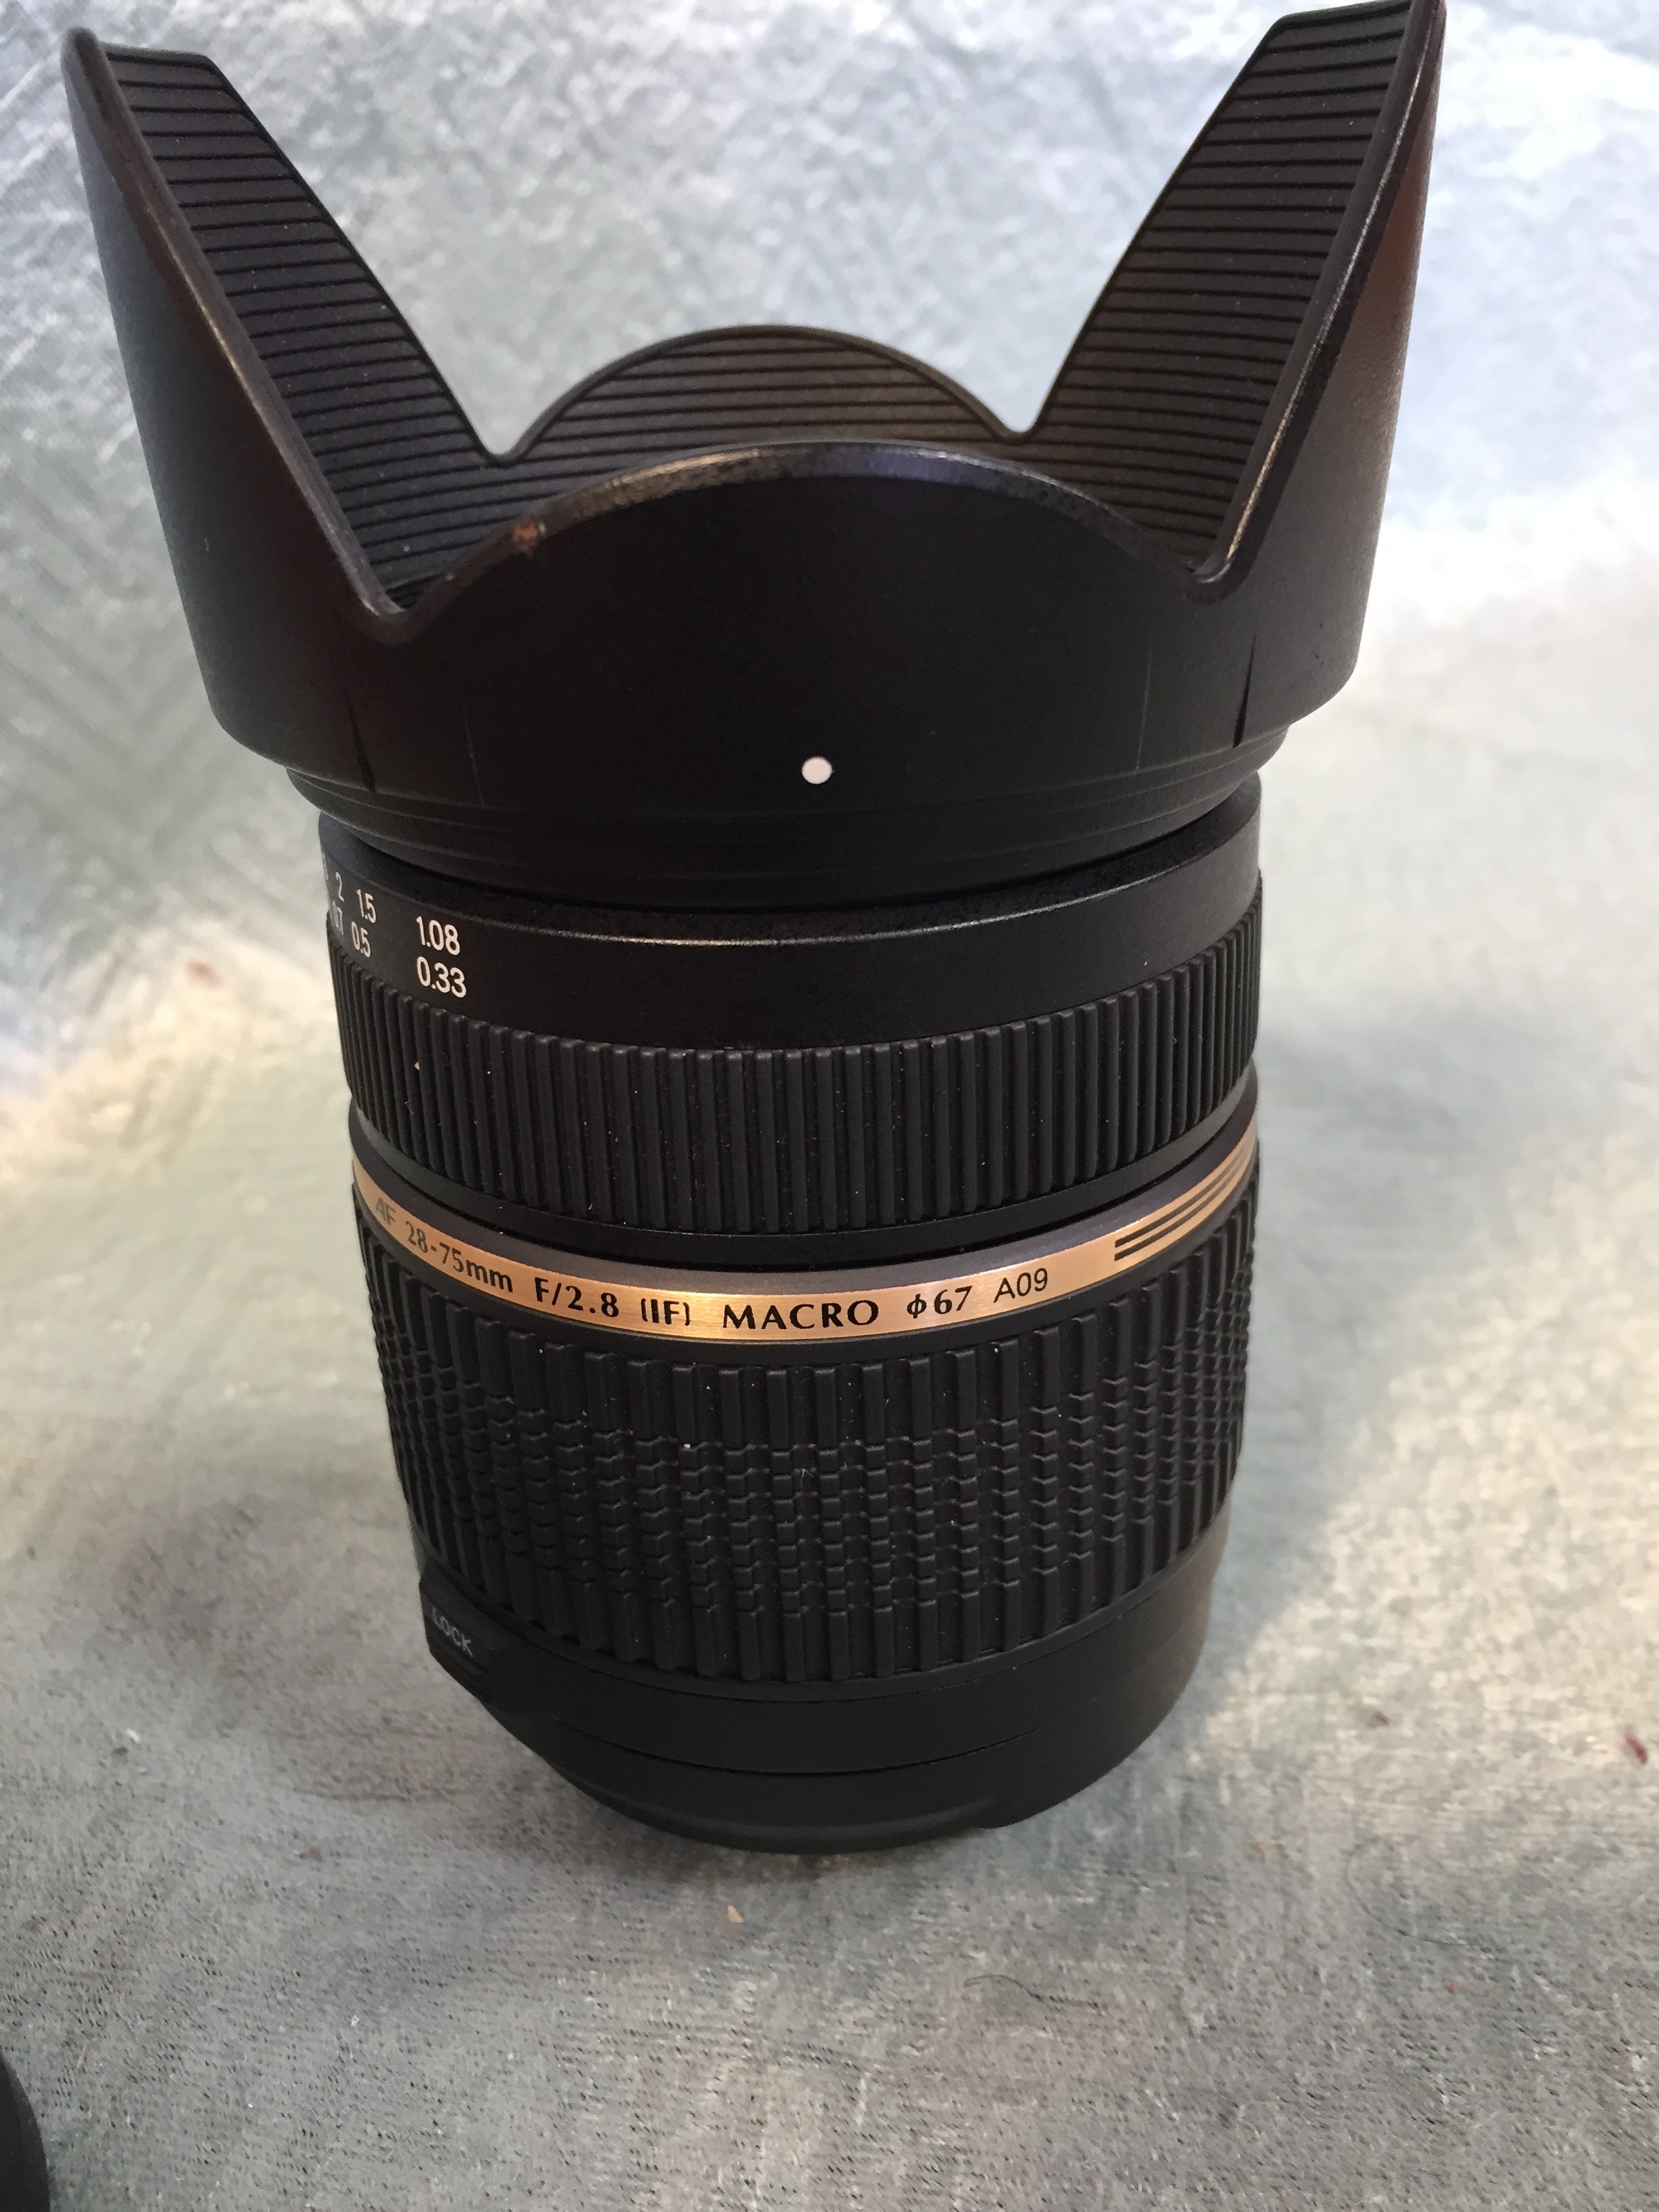 Tamron SP AF 28-75mm F/2.8 XR Di LD Aspherical [IF] Macro Lens for Nikon (7611402944750)